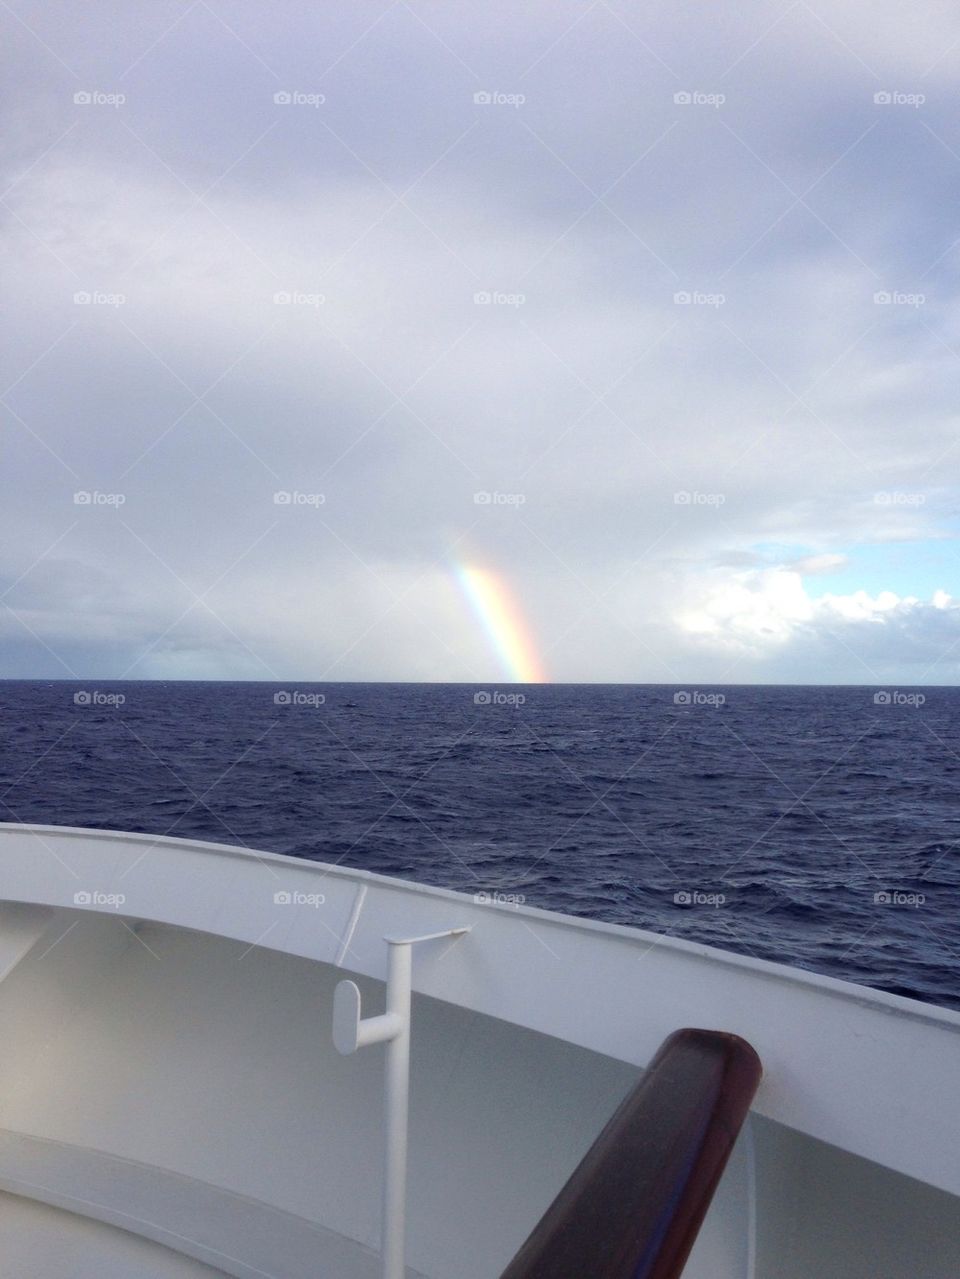 Rainbow in the ocean